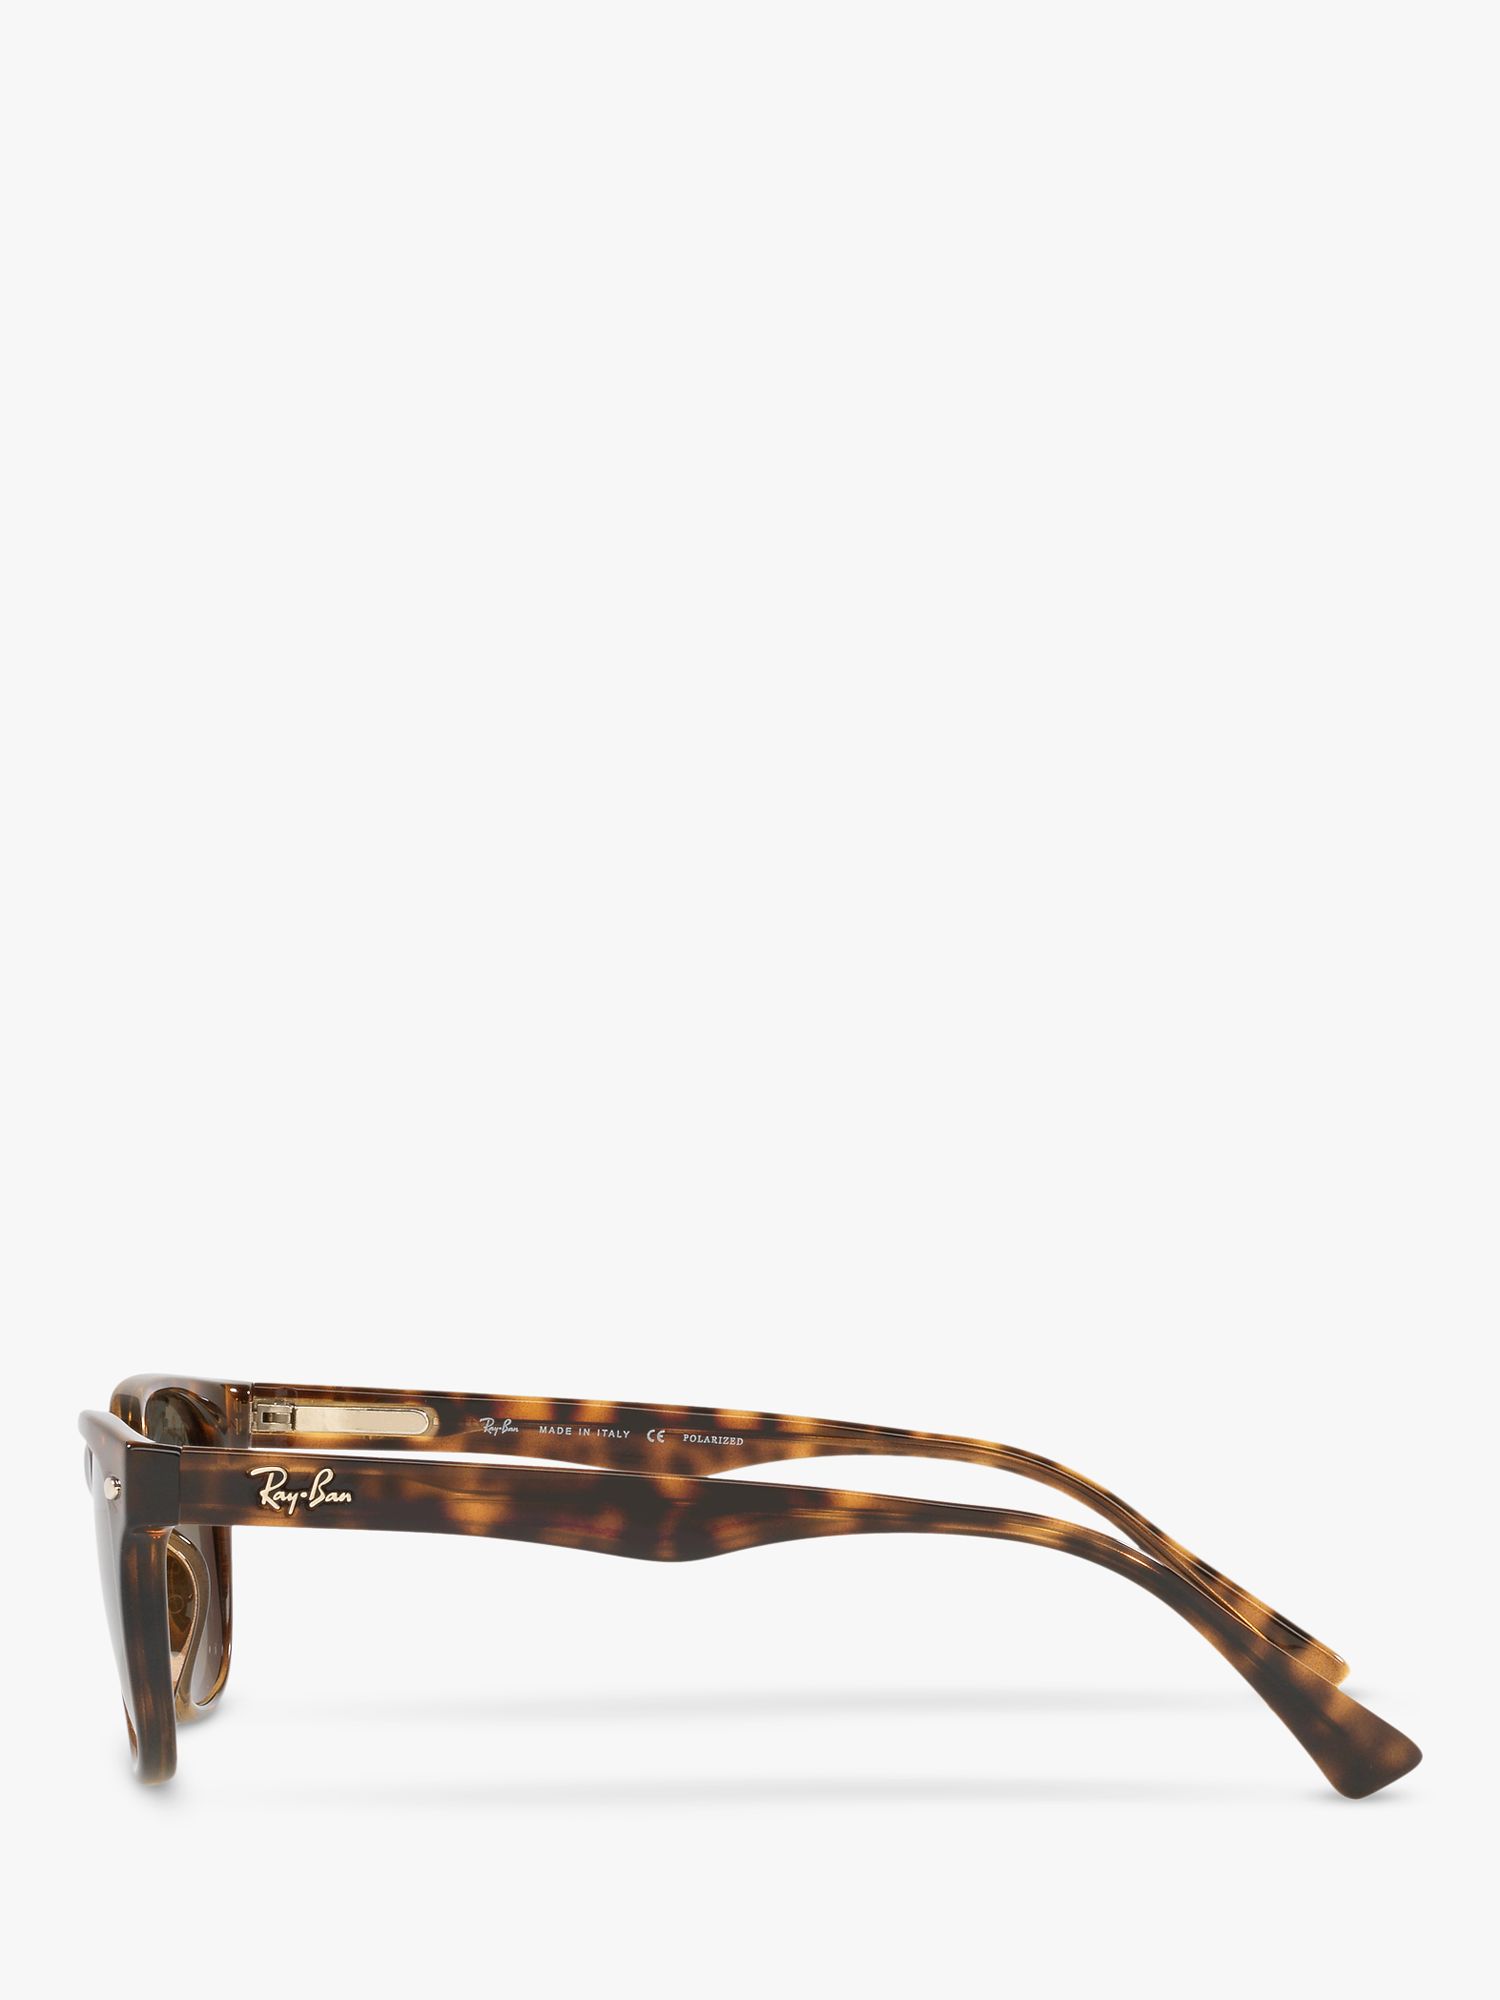 Ray-Ban RB4140 Women's Polarised Square Sunglasses, Tortoise/Grey